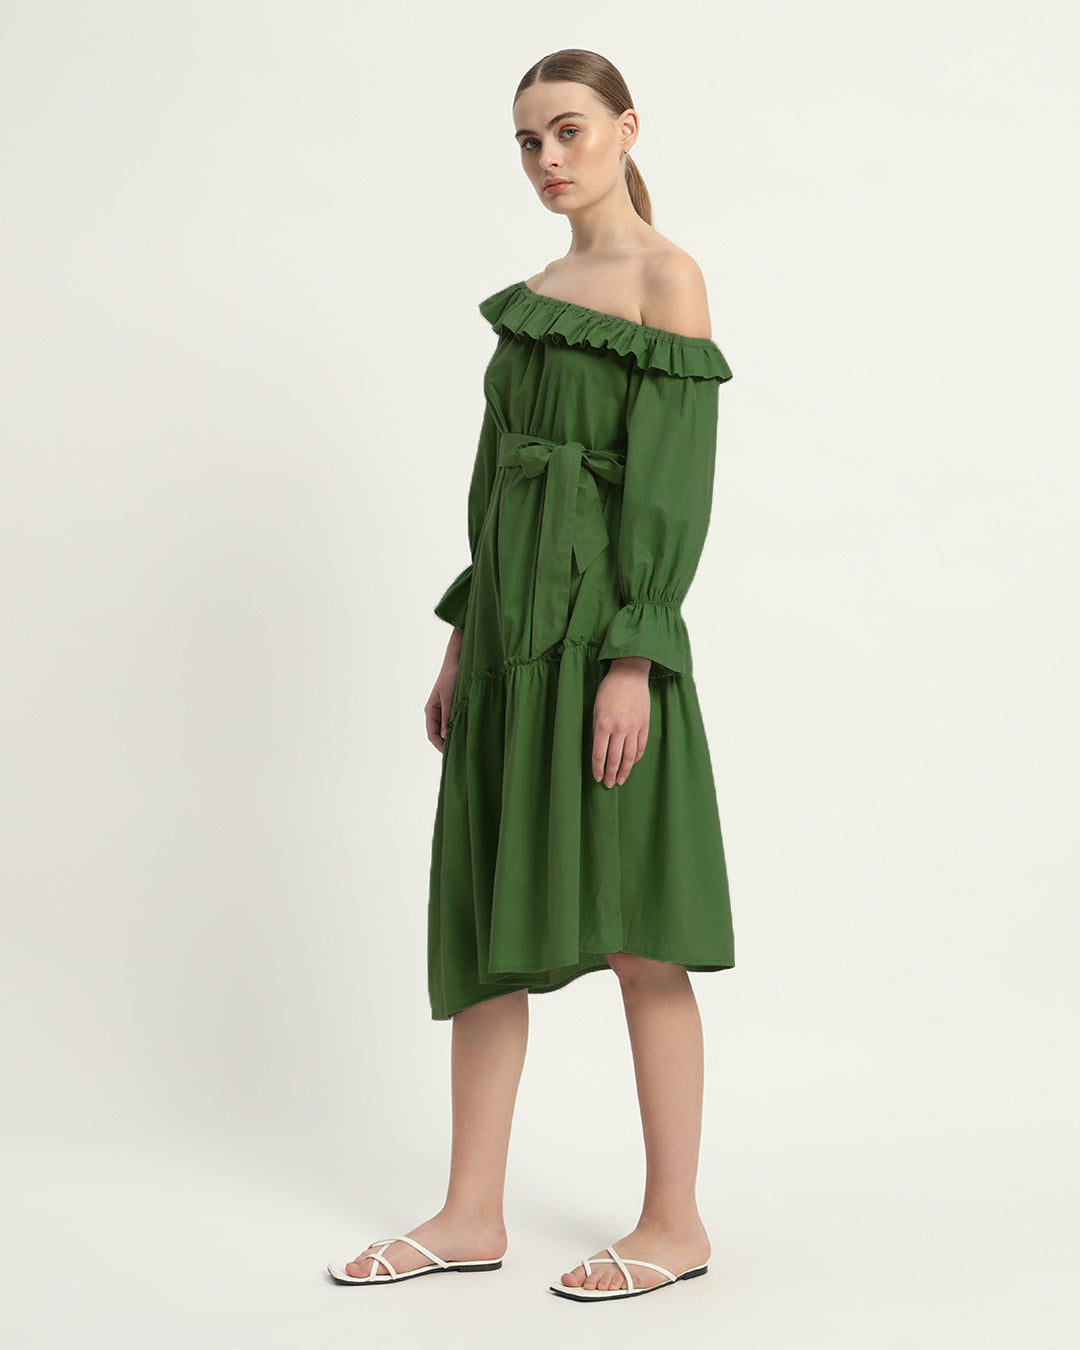 The Stellata Emerald Cotton Dress